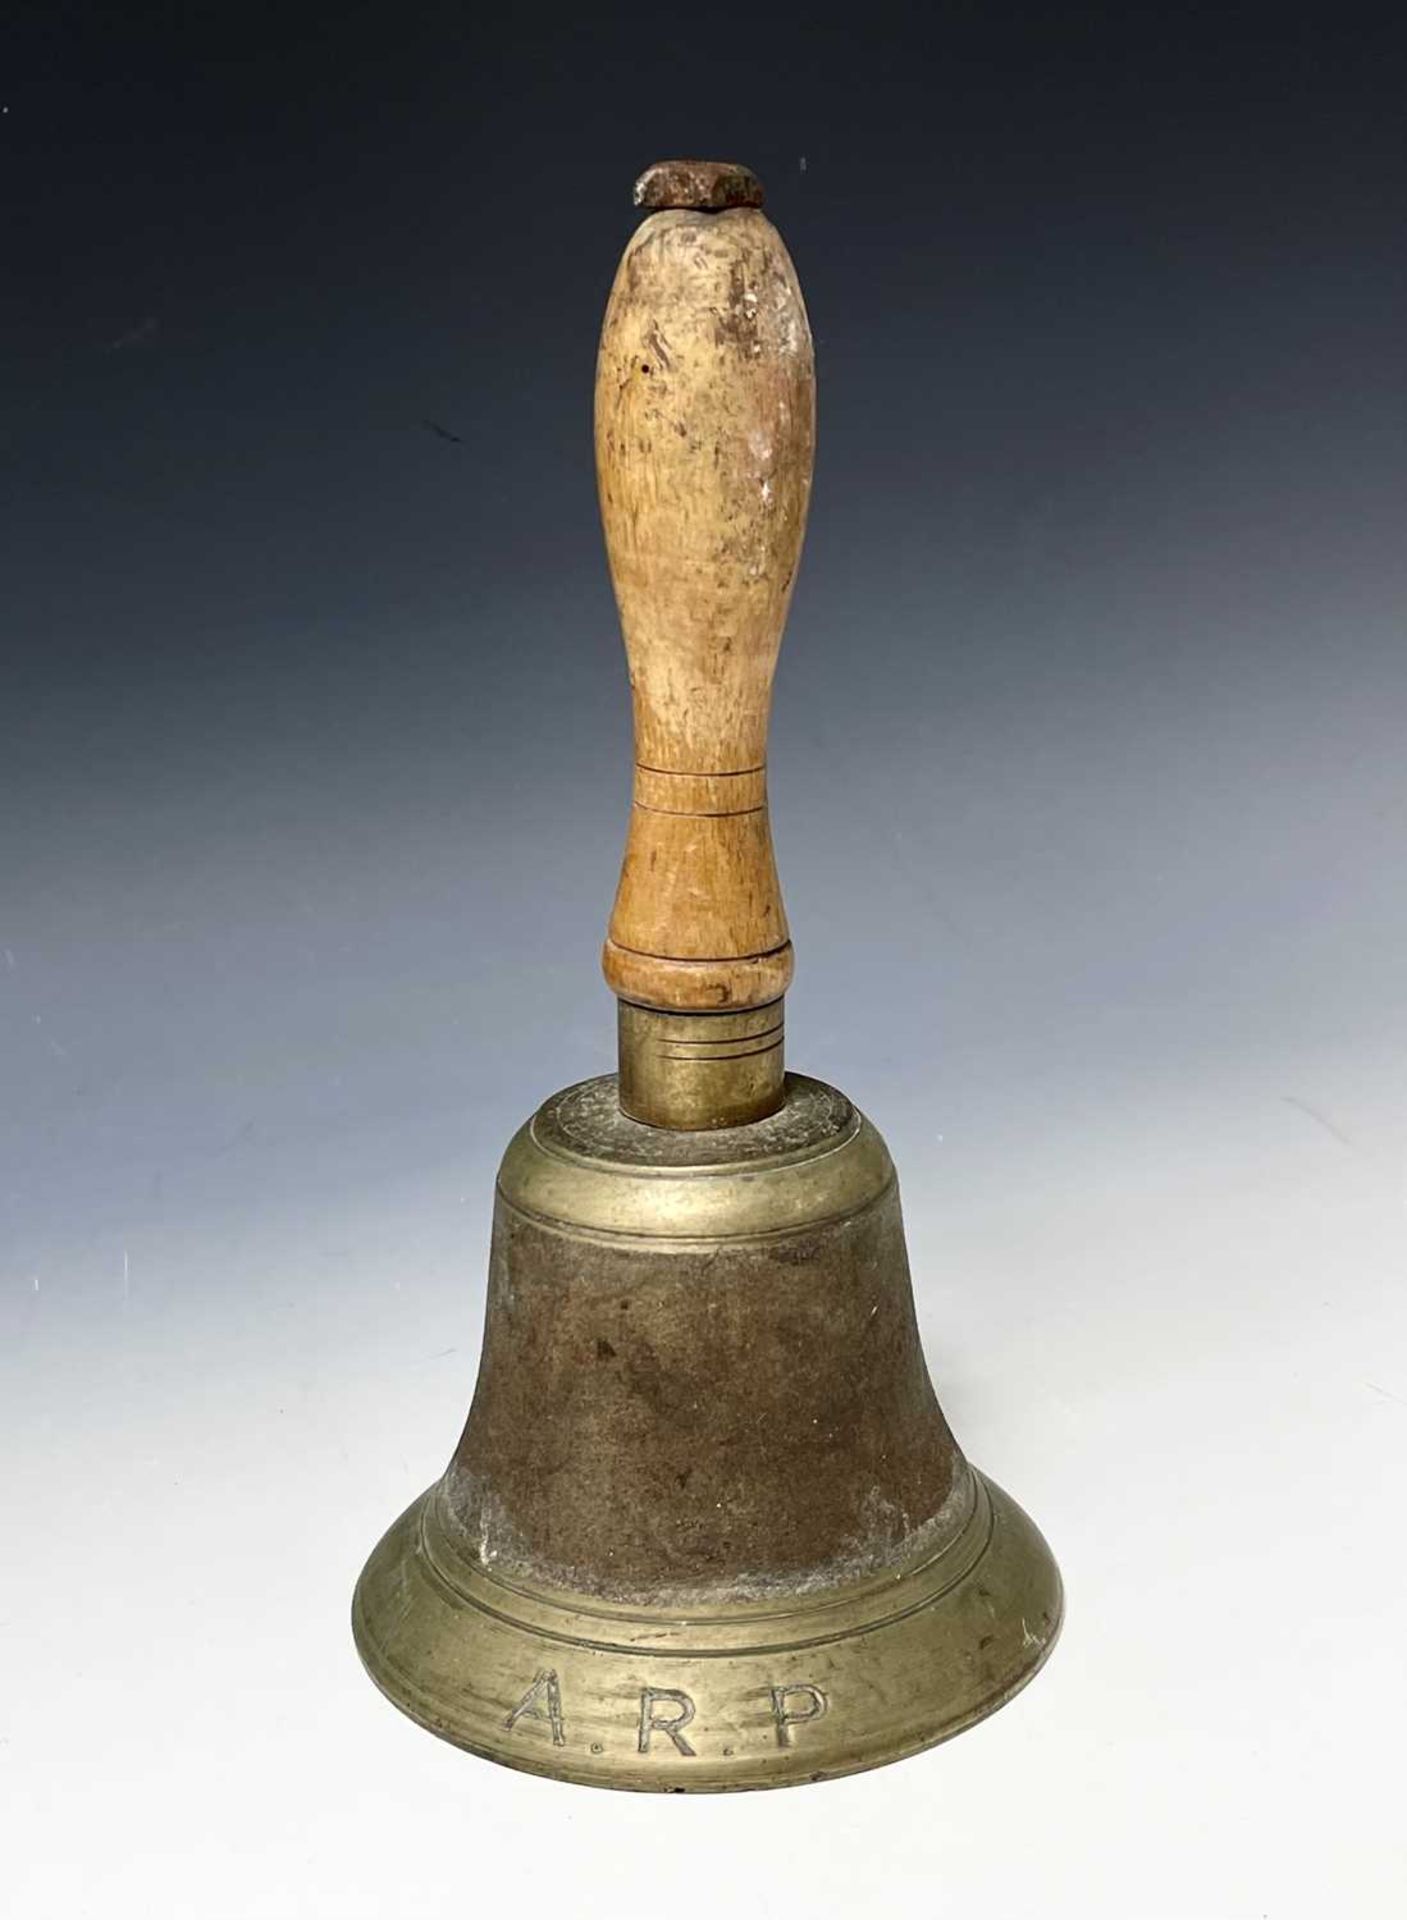 World War Two Air Raid Patrol Hand Bell. A wooden handled brass bell height 10". Condition: please